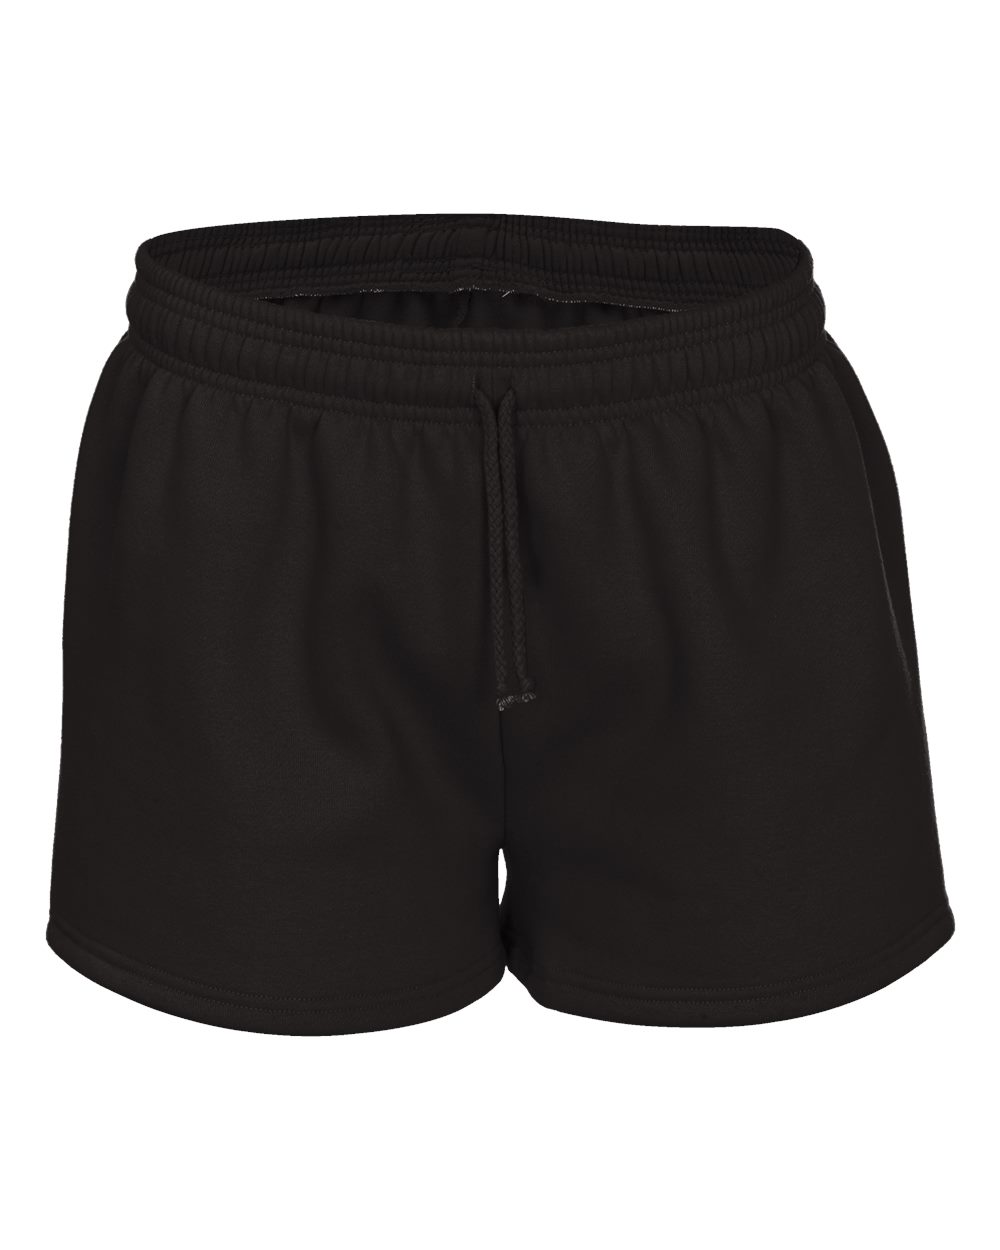 80Eighty® Women's Black Camo Fleece Shorts - XS